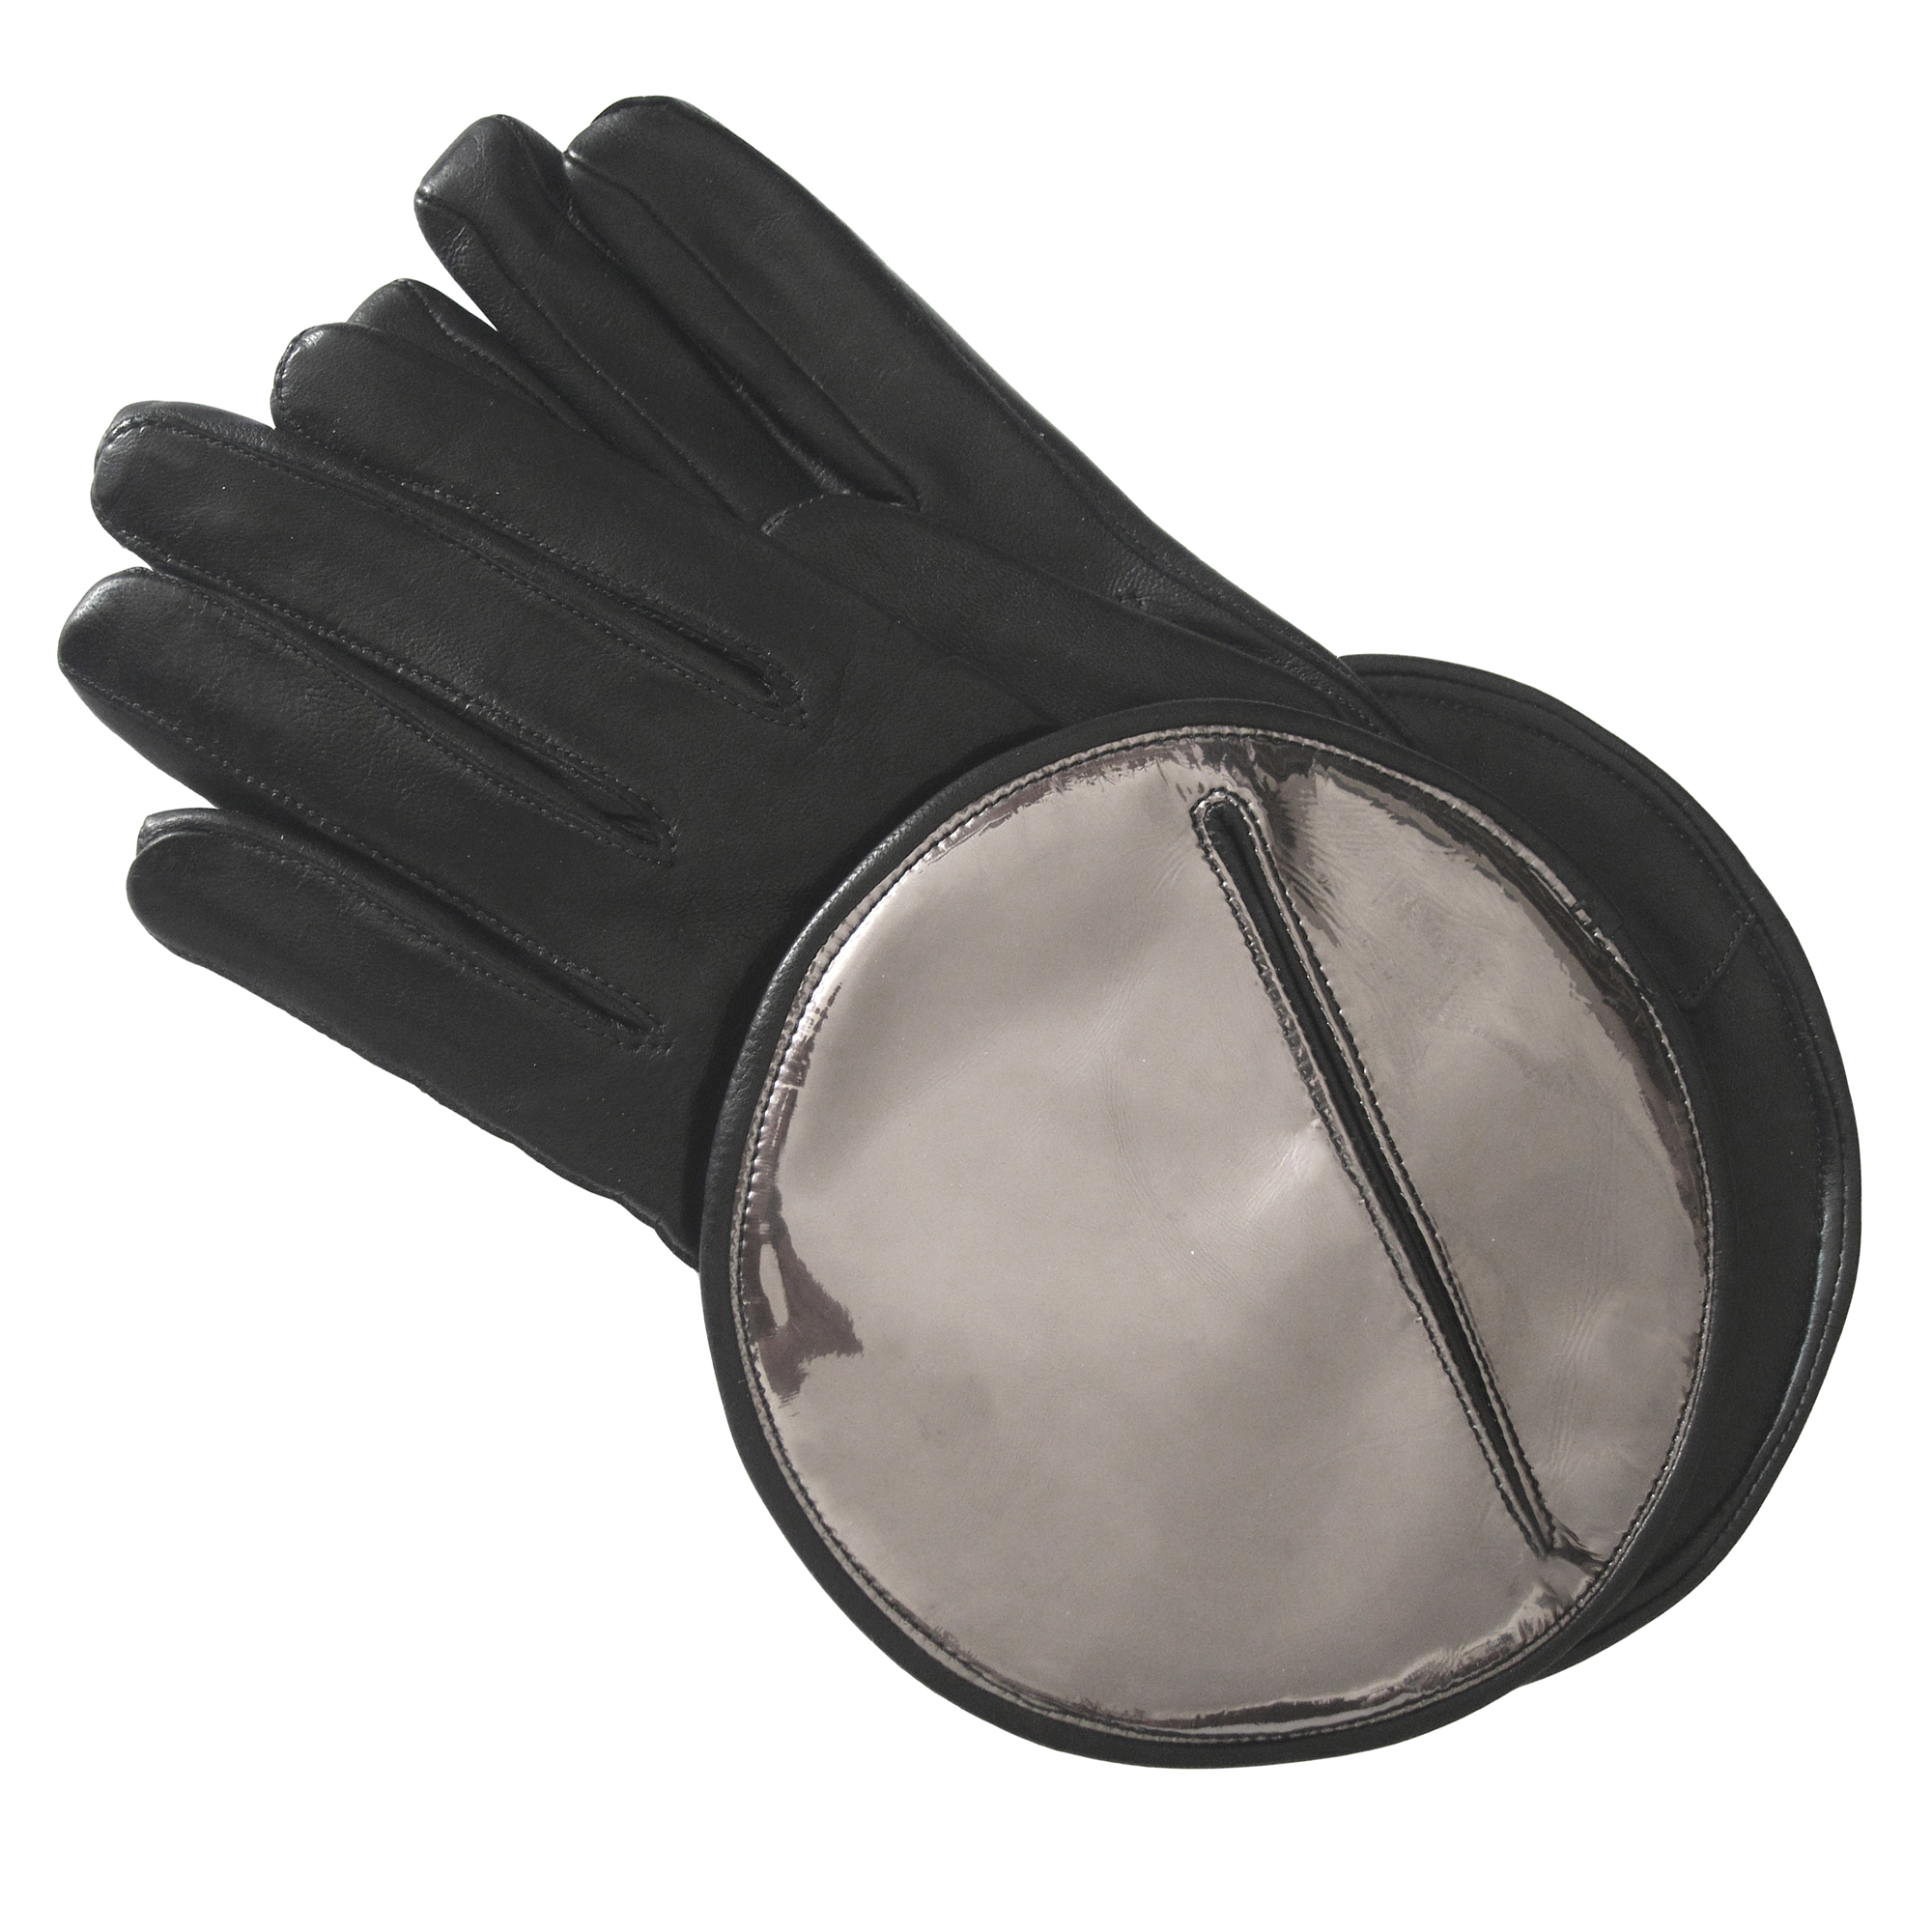 Thomasine Madrid leather gloves with gunmetal vinyl detail